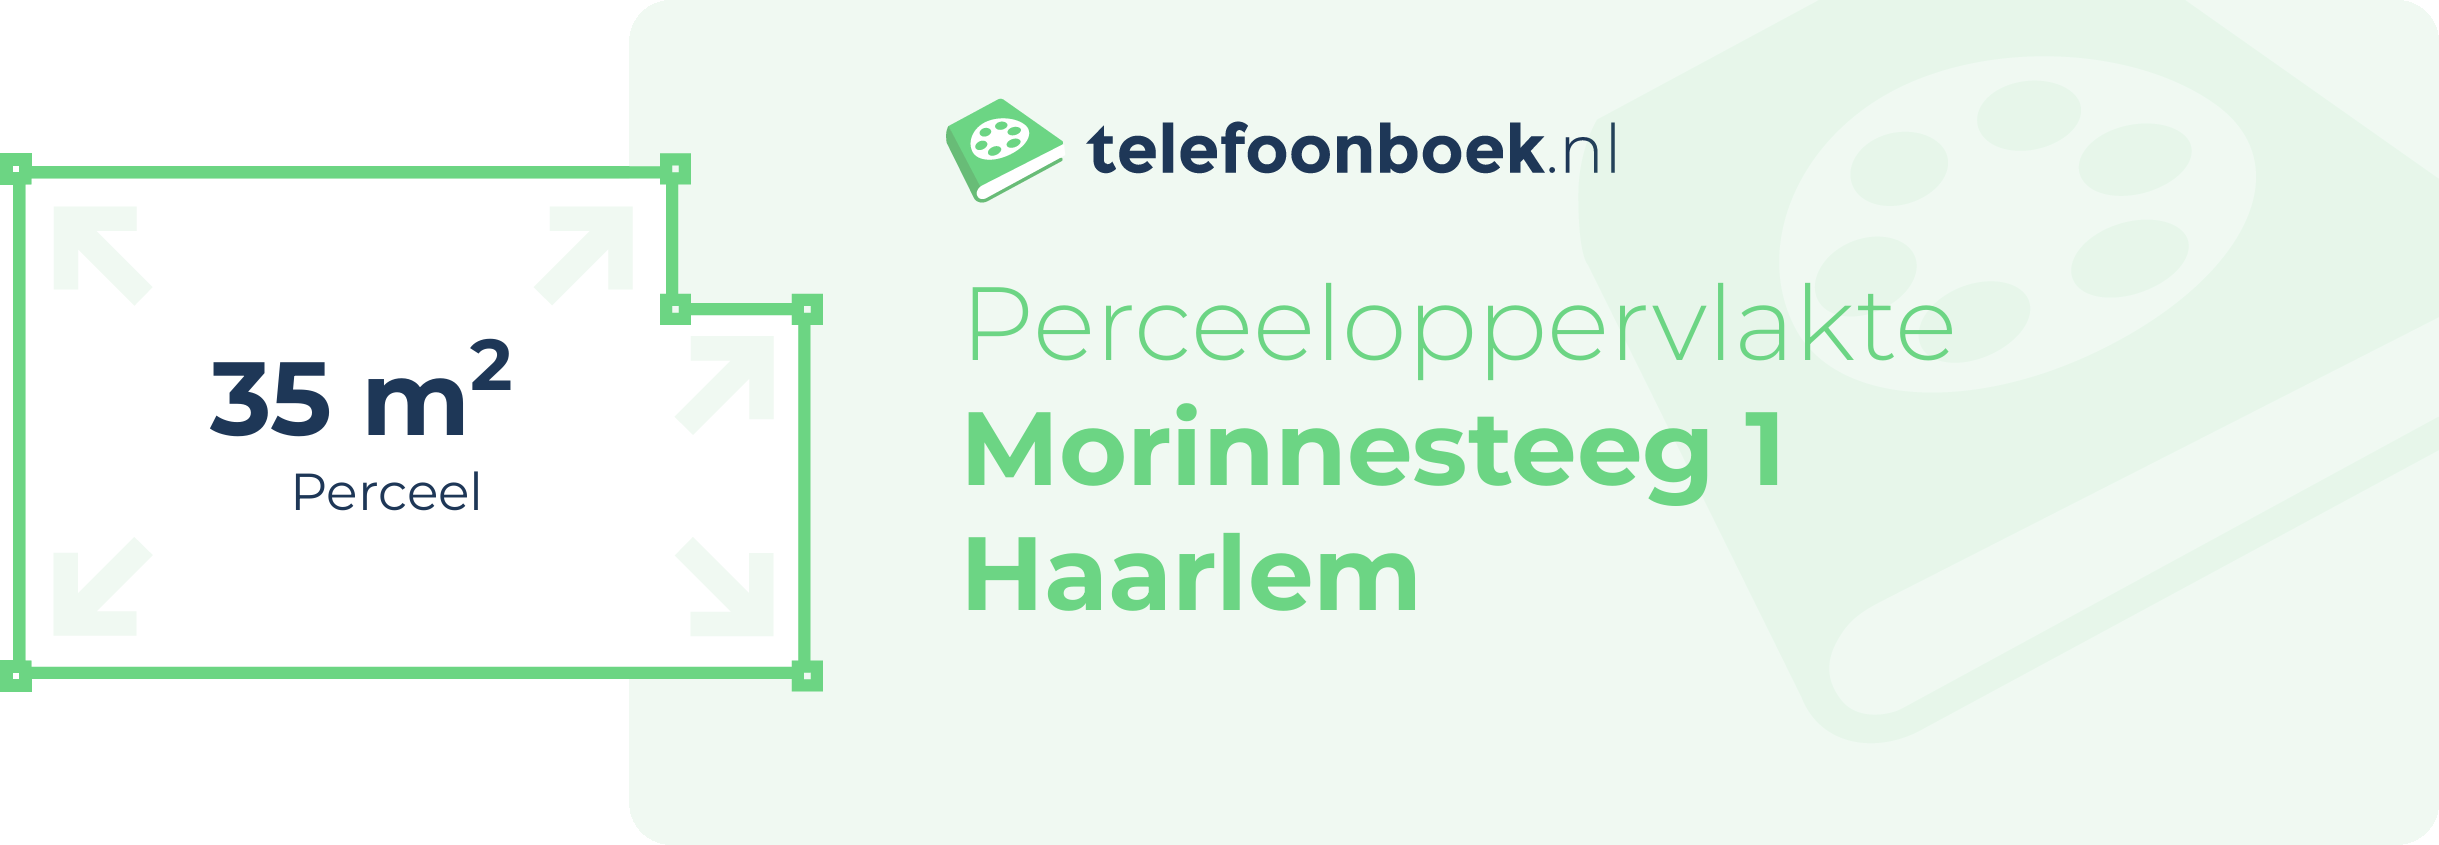 Perceeloppervlakte Morinnesteeg 1 Haarlem